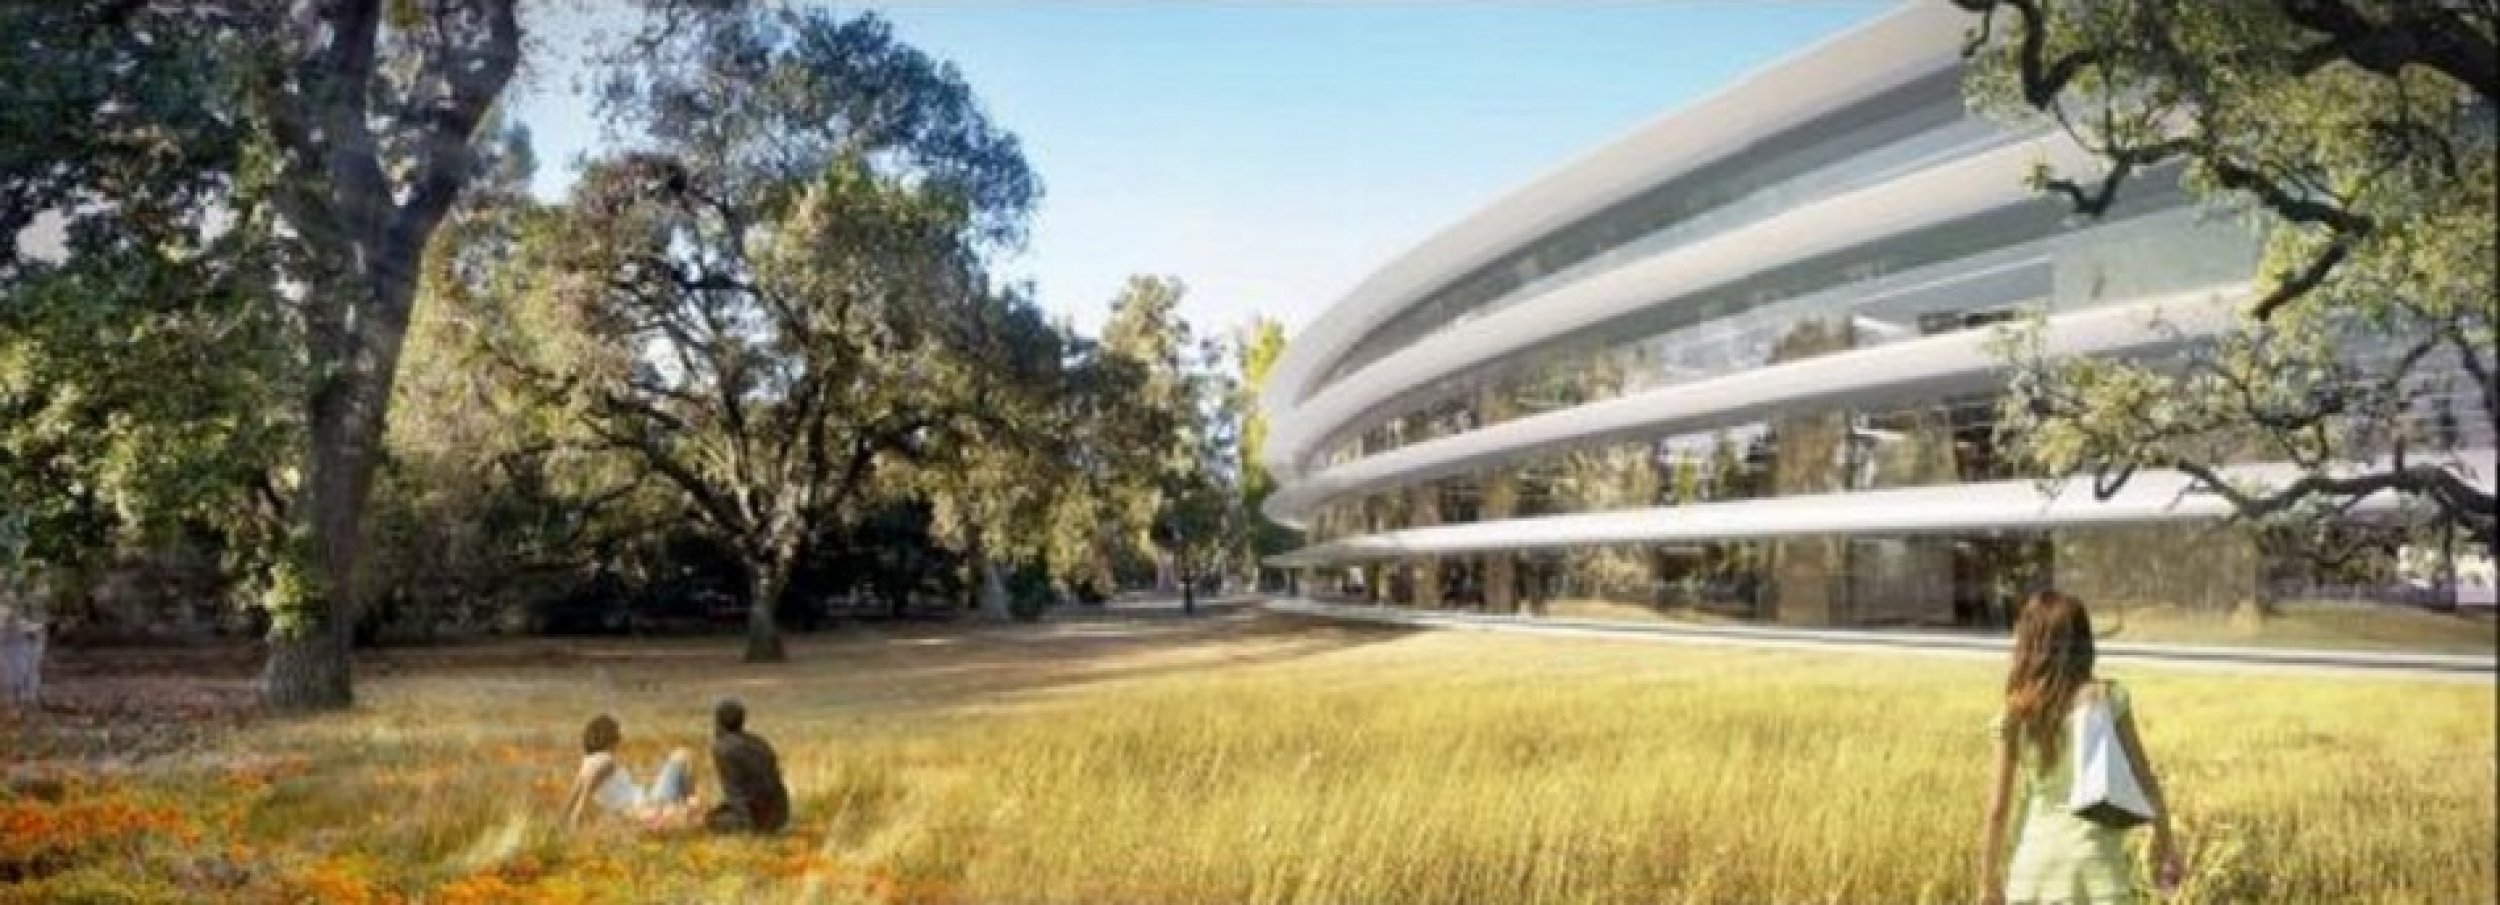 Cupertino City Posts Details of Apple039s Futuristic Spaceship Campus